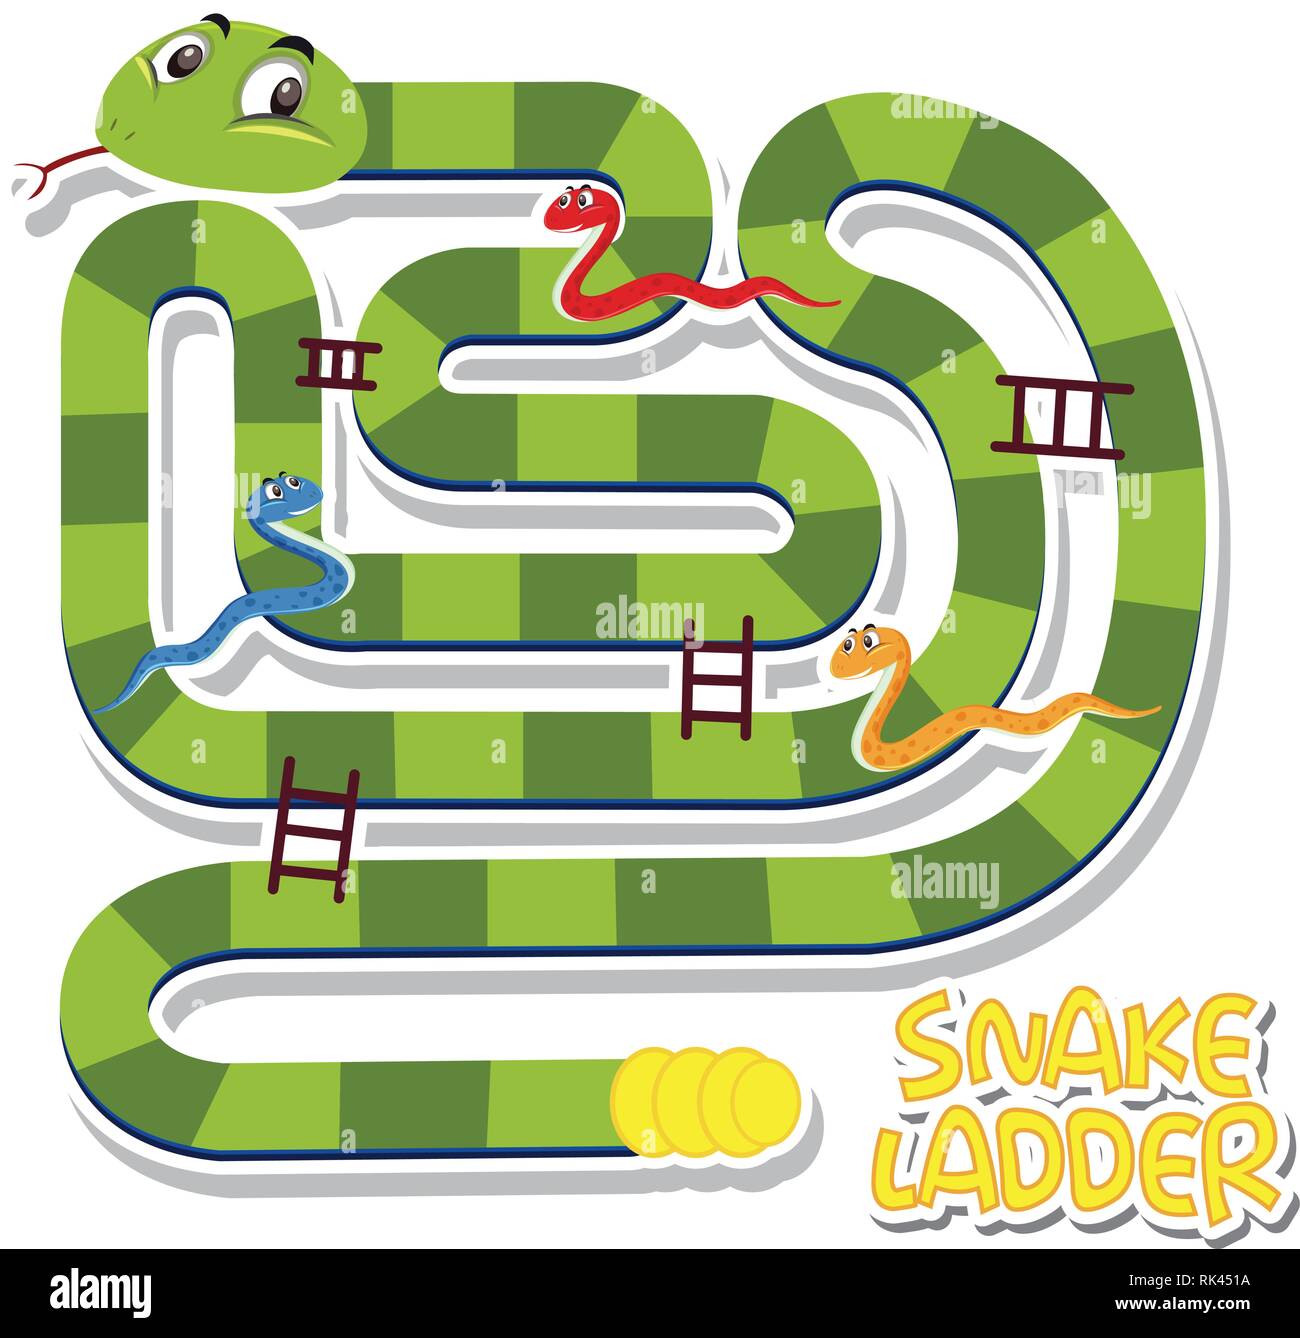 Snake ladder game template illustration Stock Vector Image & Art - Alamy